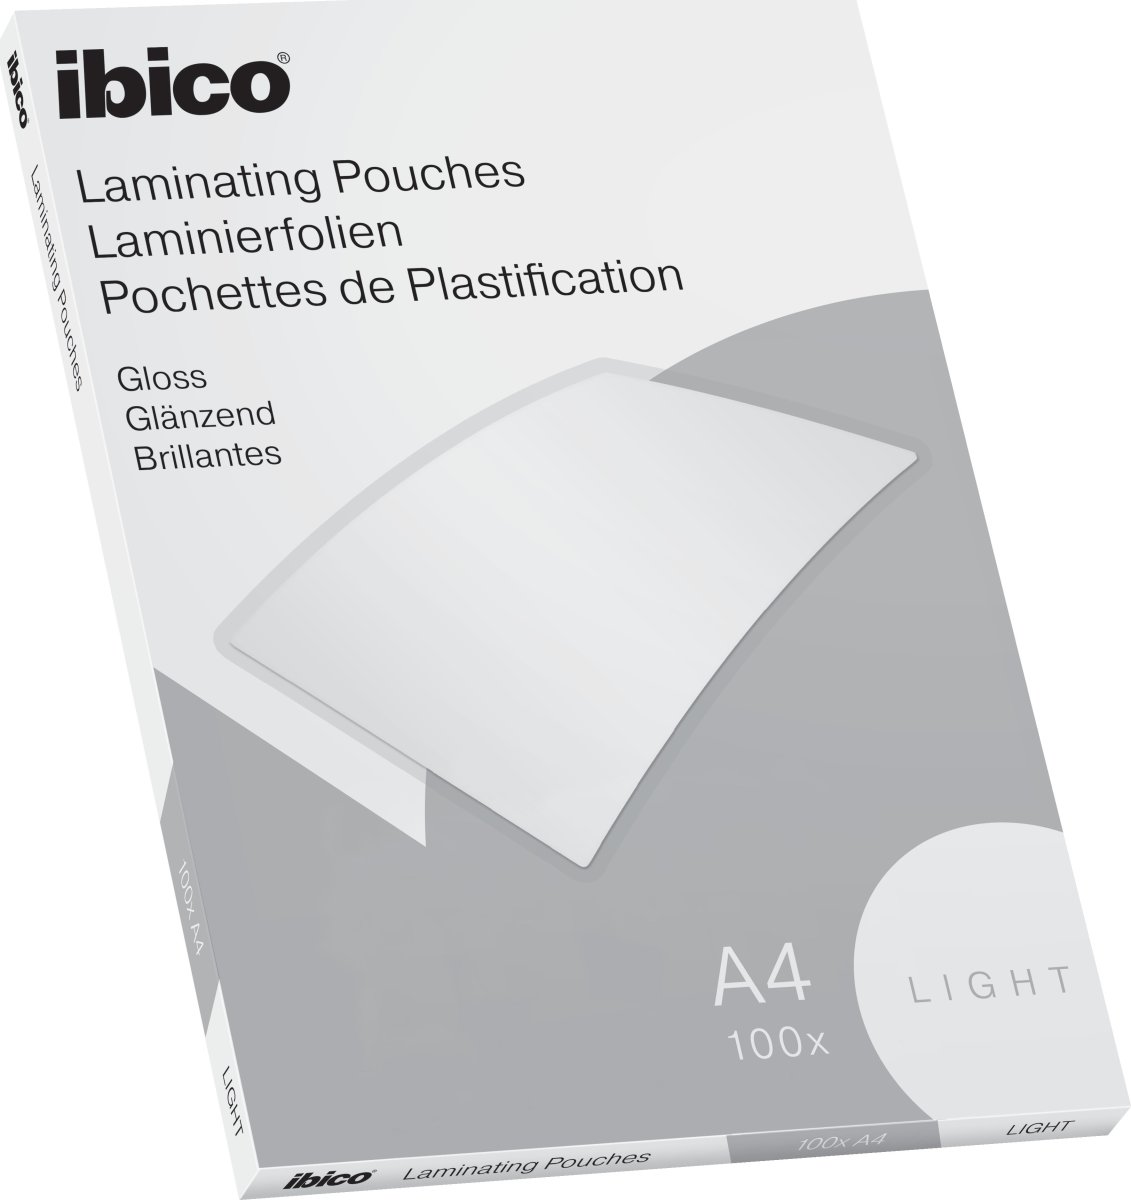 Ibico lamineringslommer, 80my, A4, 100 stk.